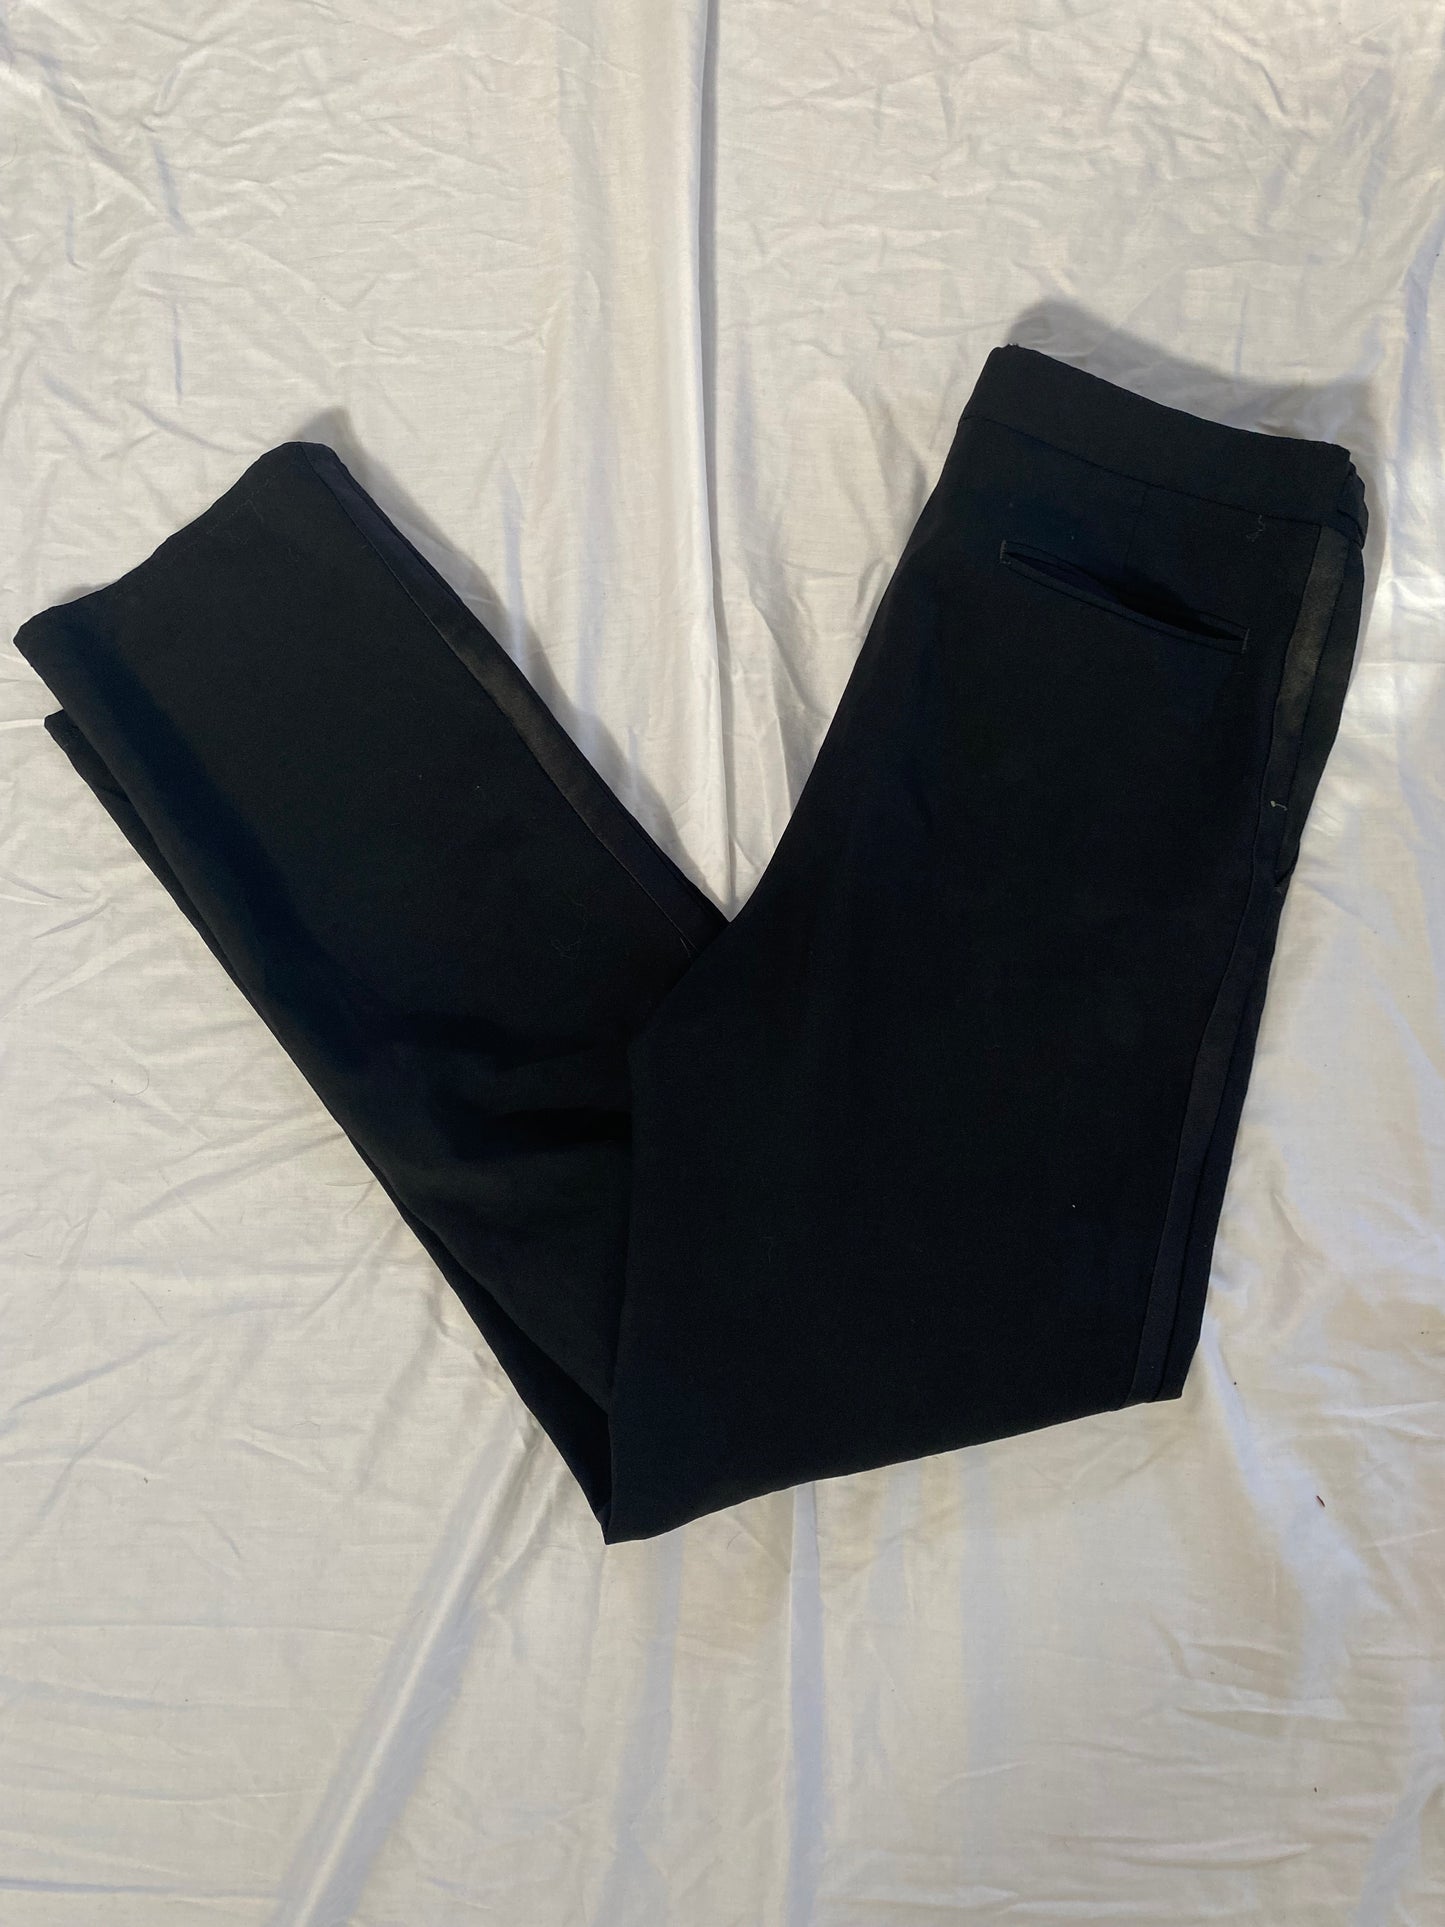 Adjustable Black Dress Pants